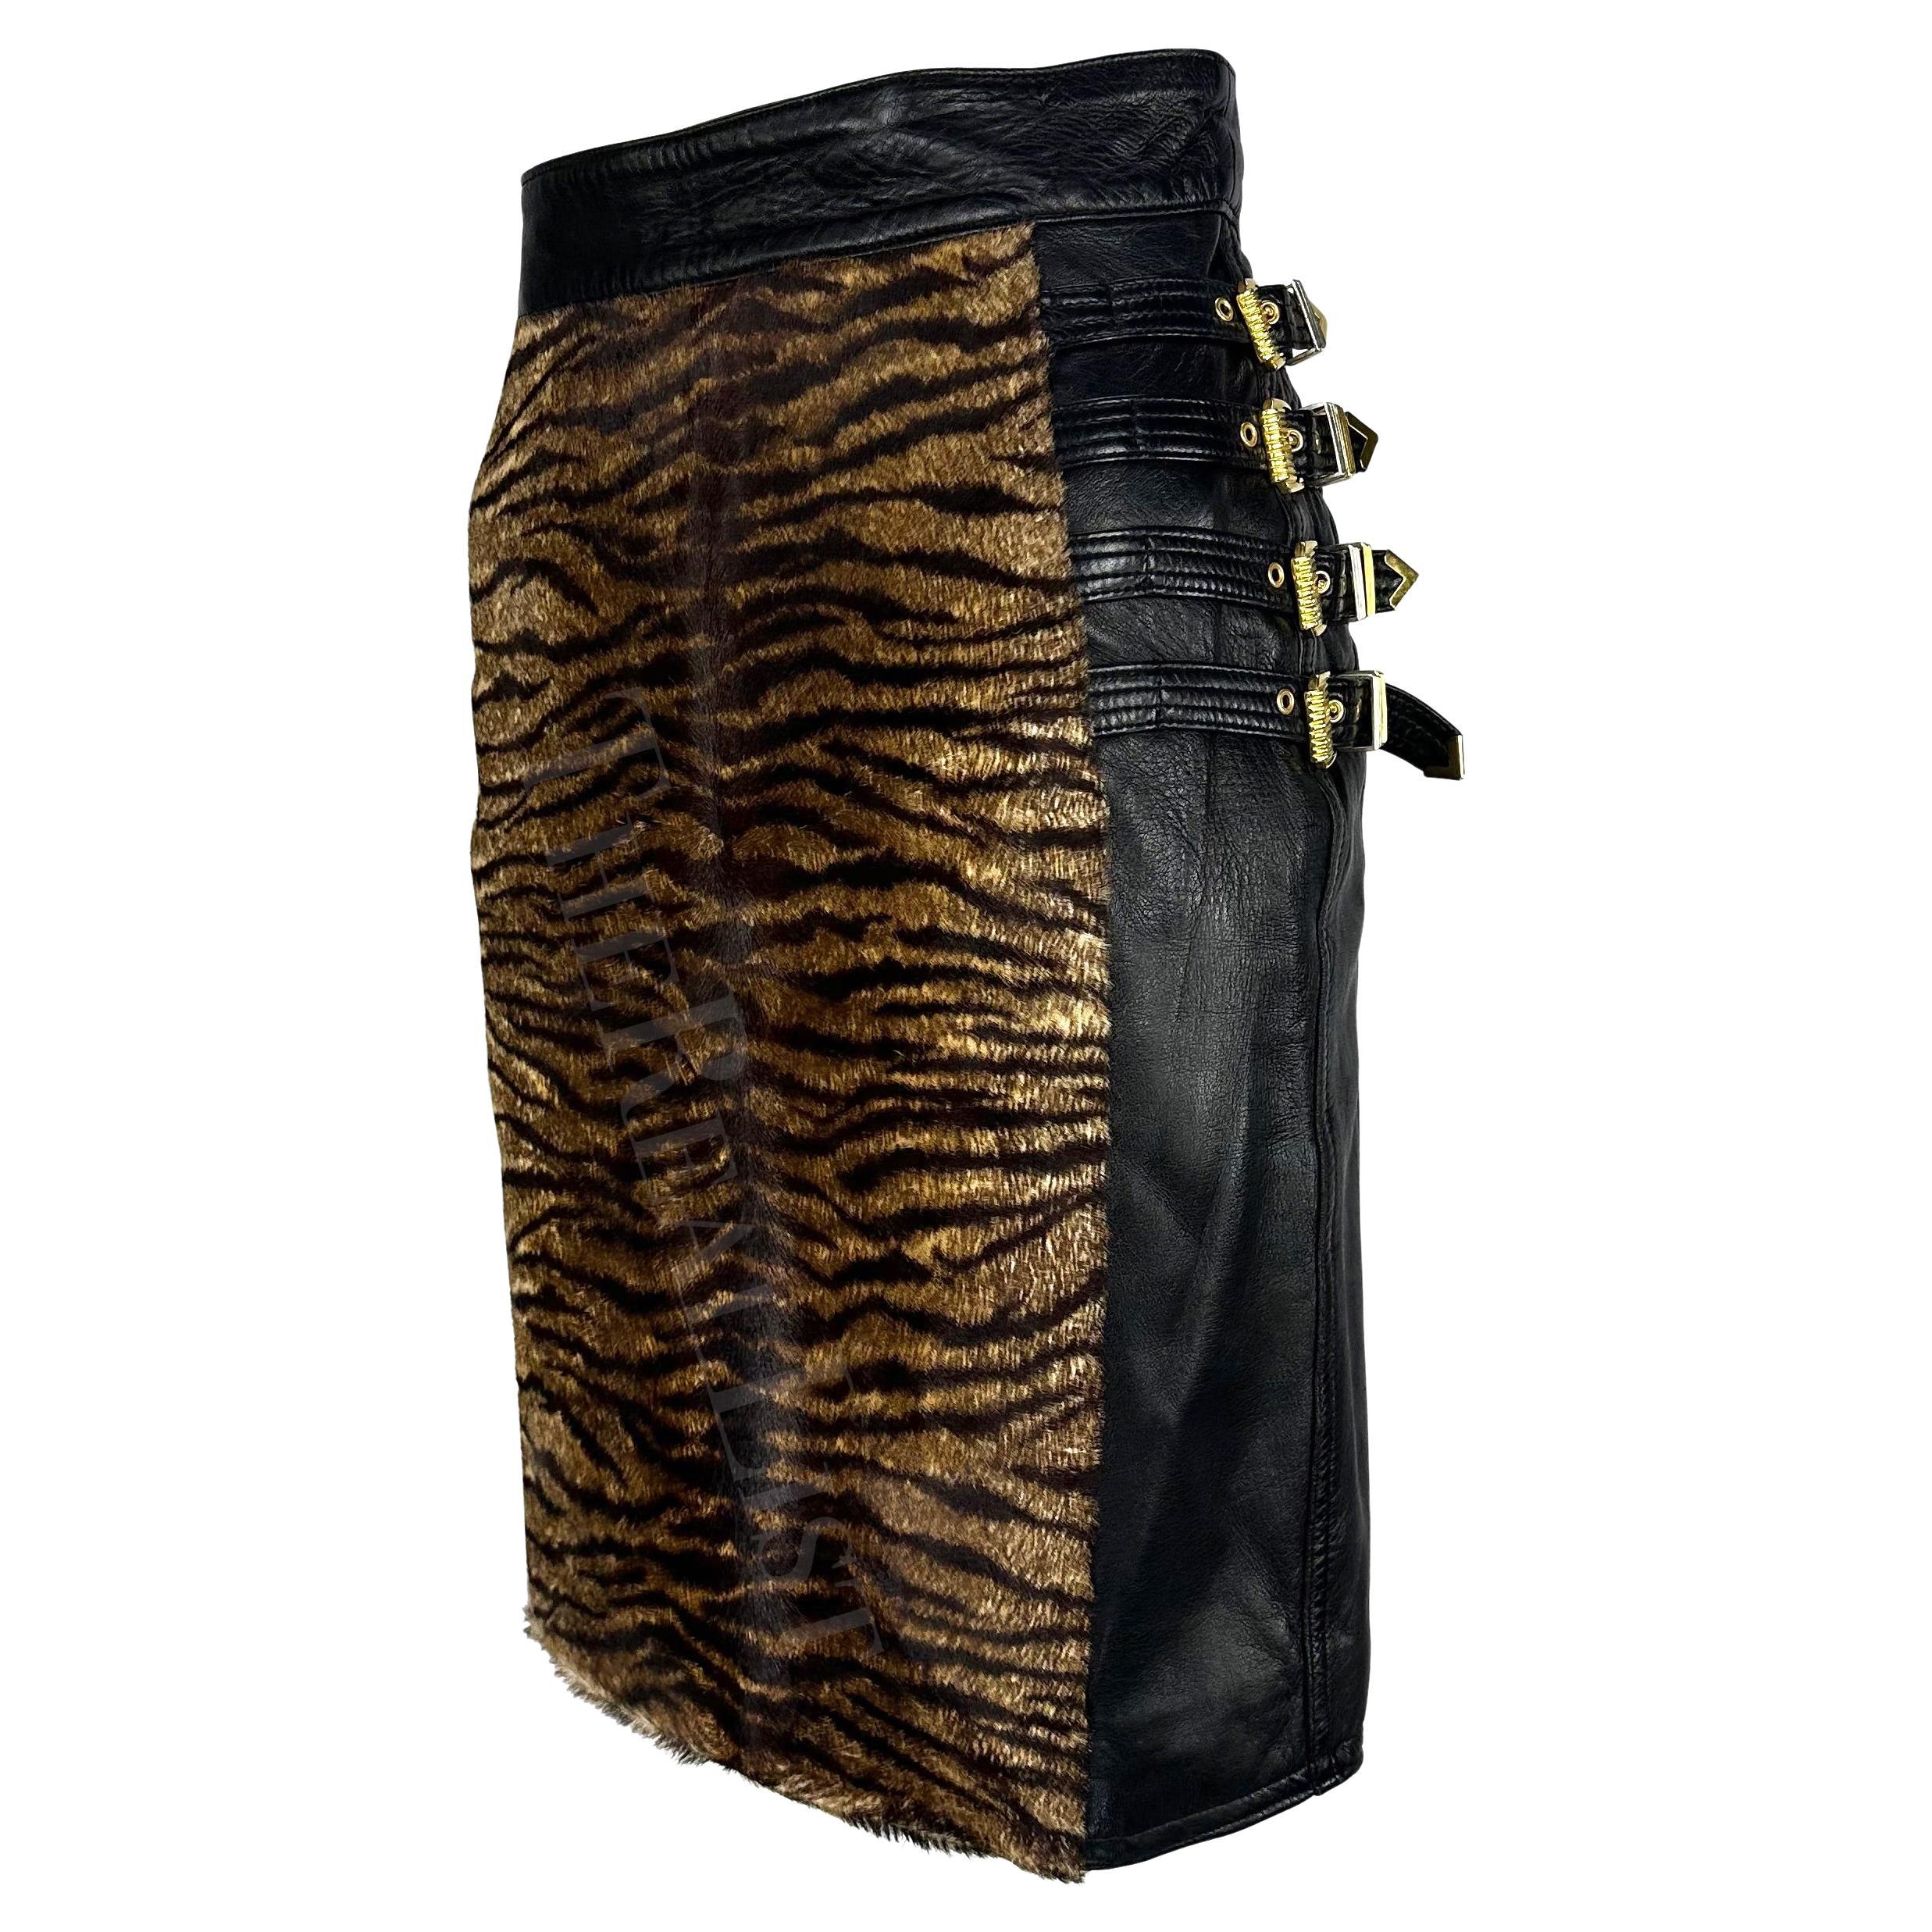 F/W 1992 Gianni Versace "Miss S&M" Bondage Animal Print Black Leather Skirt For Sale